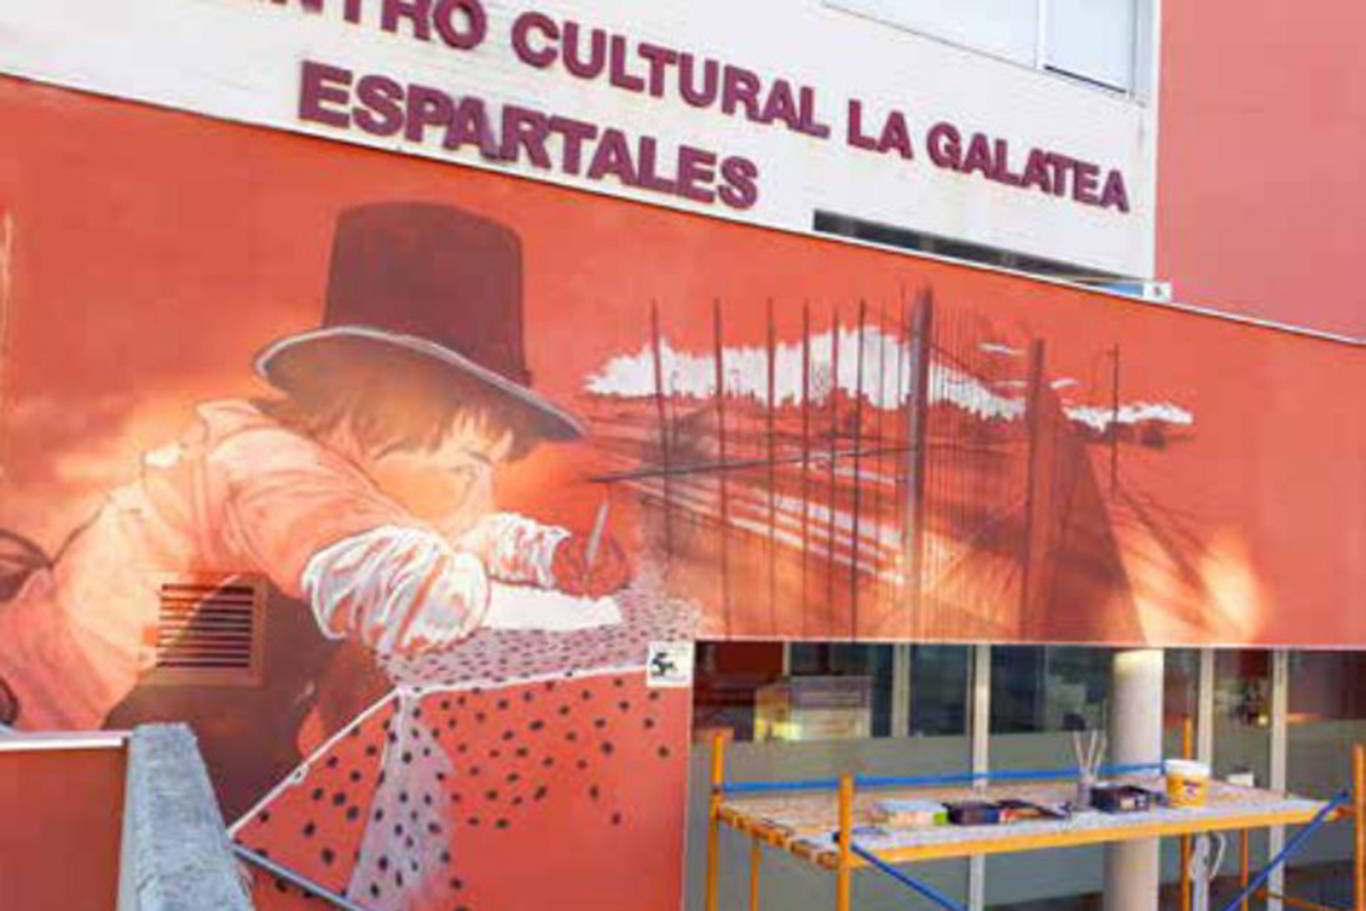 mural_galatea